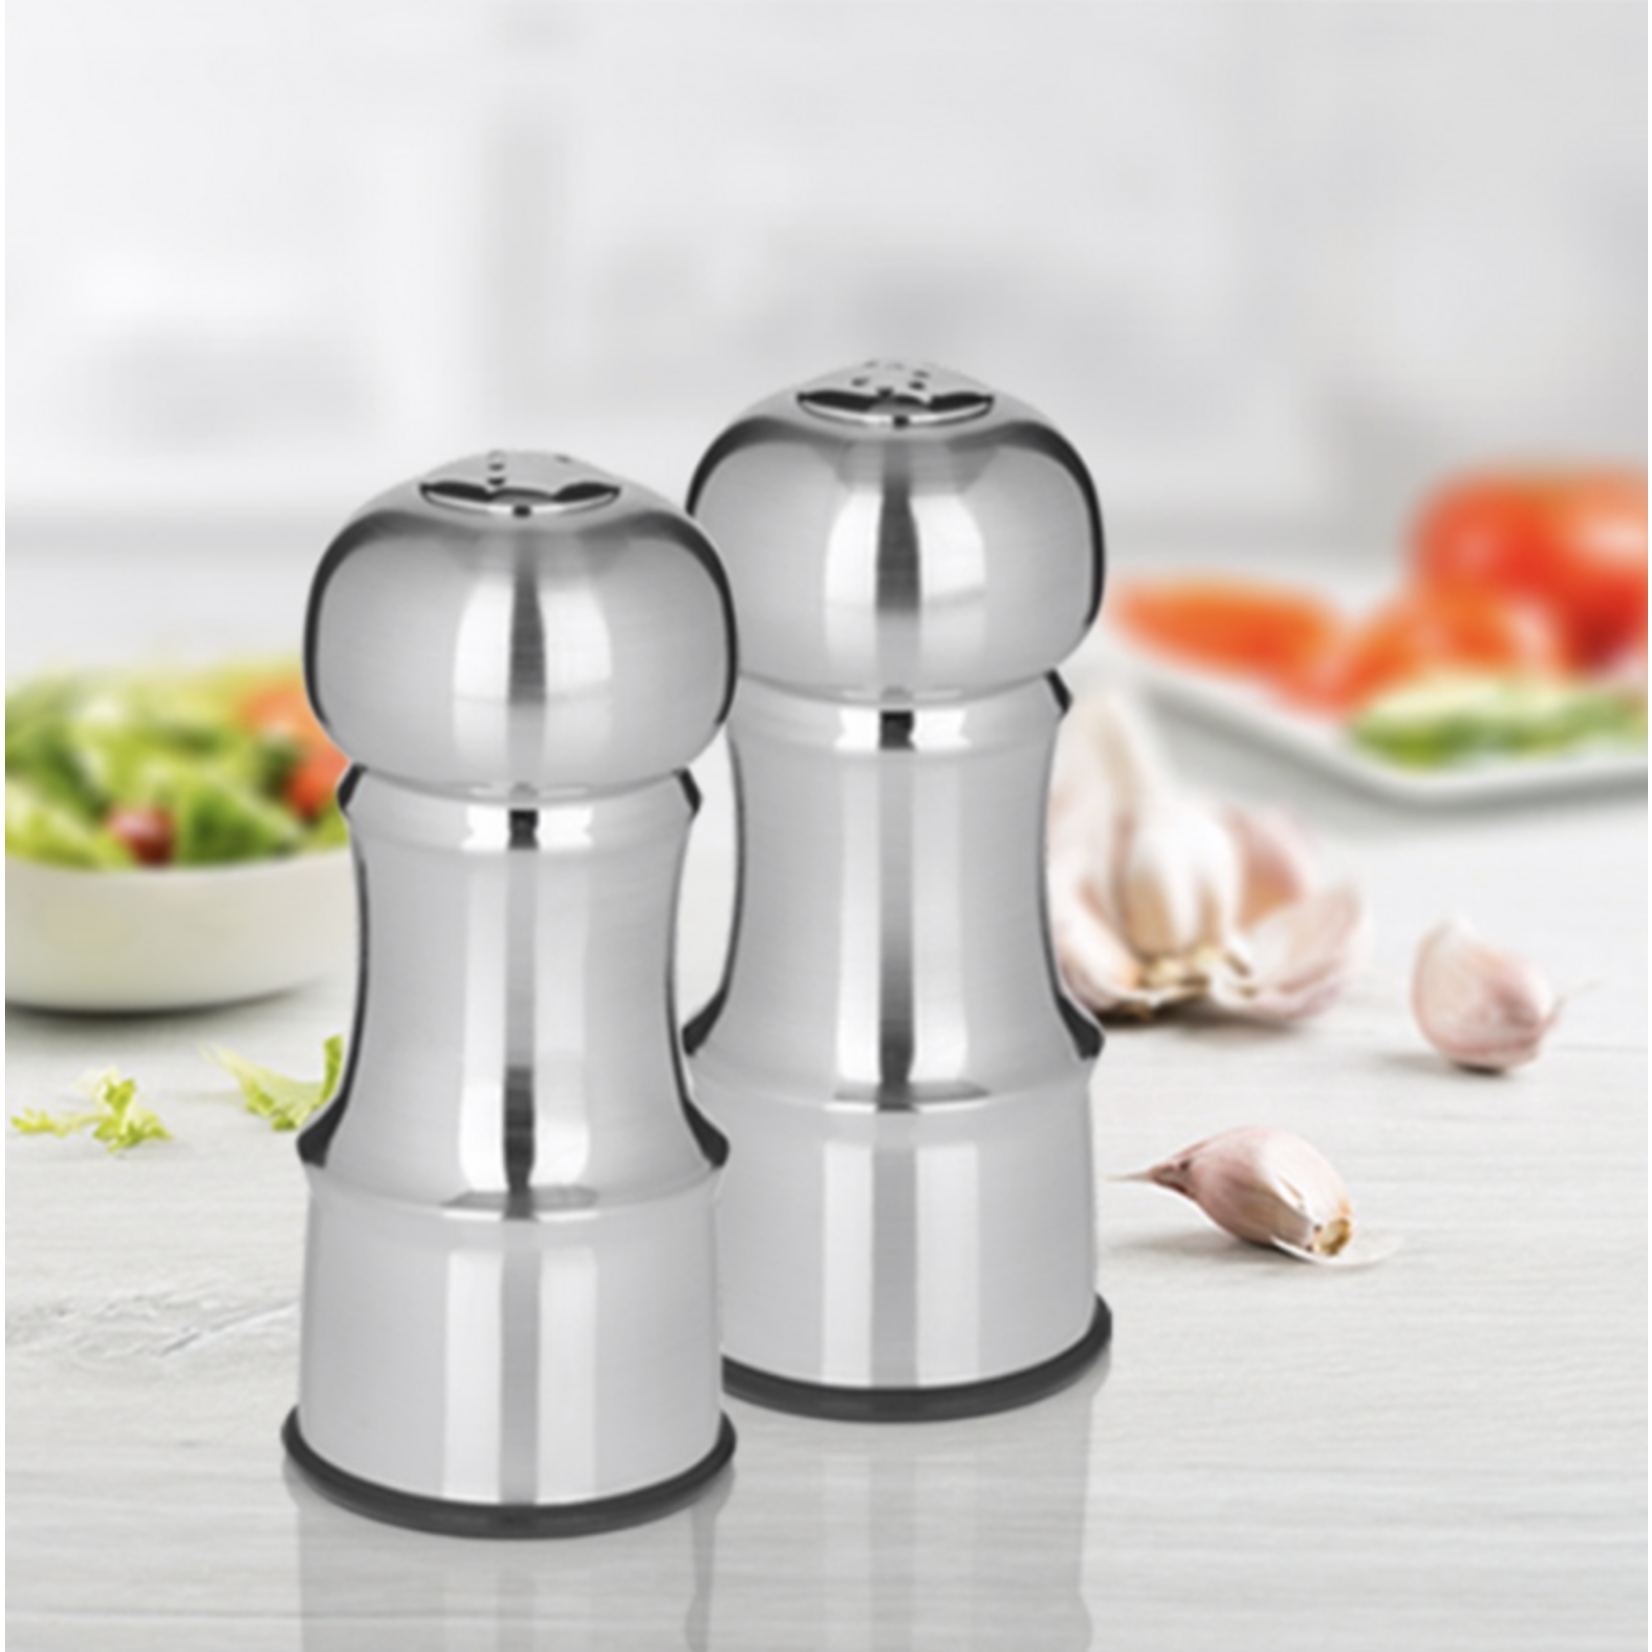 TRUDEAU TRUDEAU Salt & Pepper Shakers 4.5" - Stainless